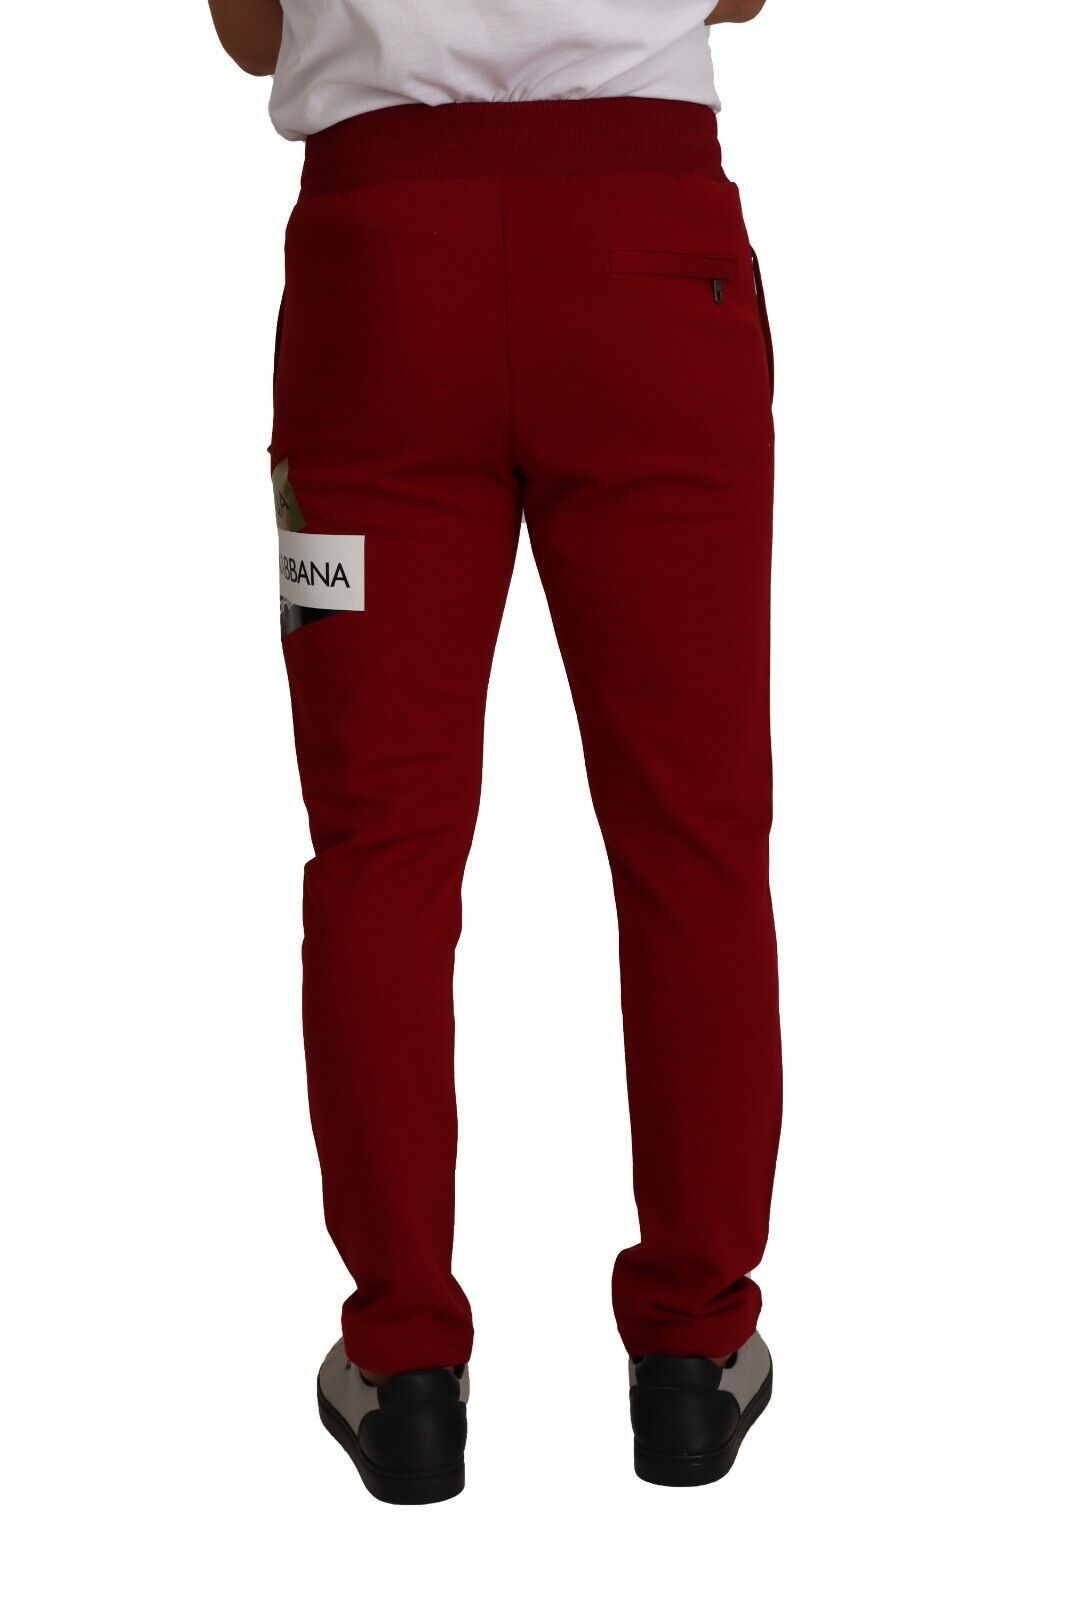 Elegant Red Jogging Pants with Drawstring Closure